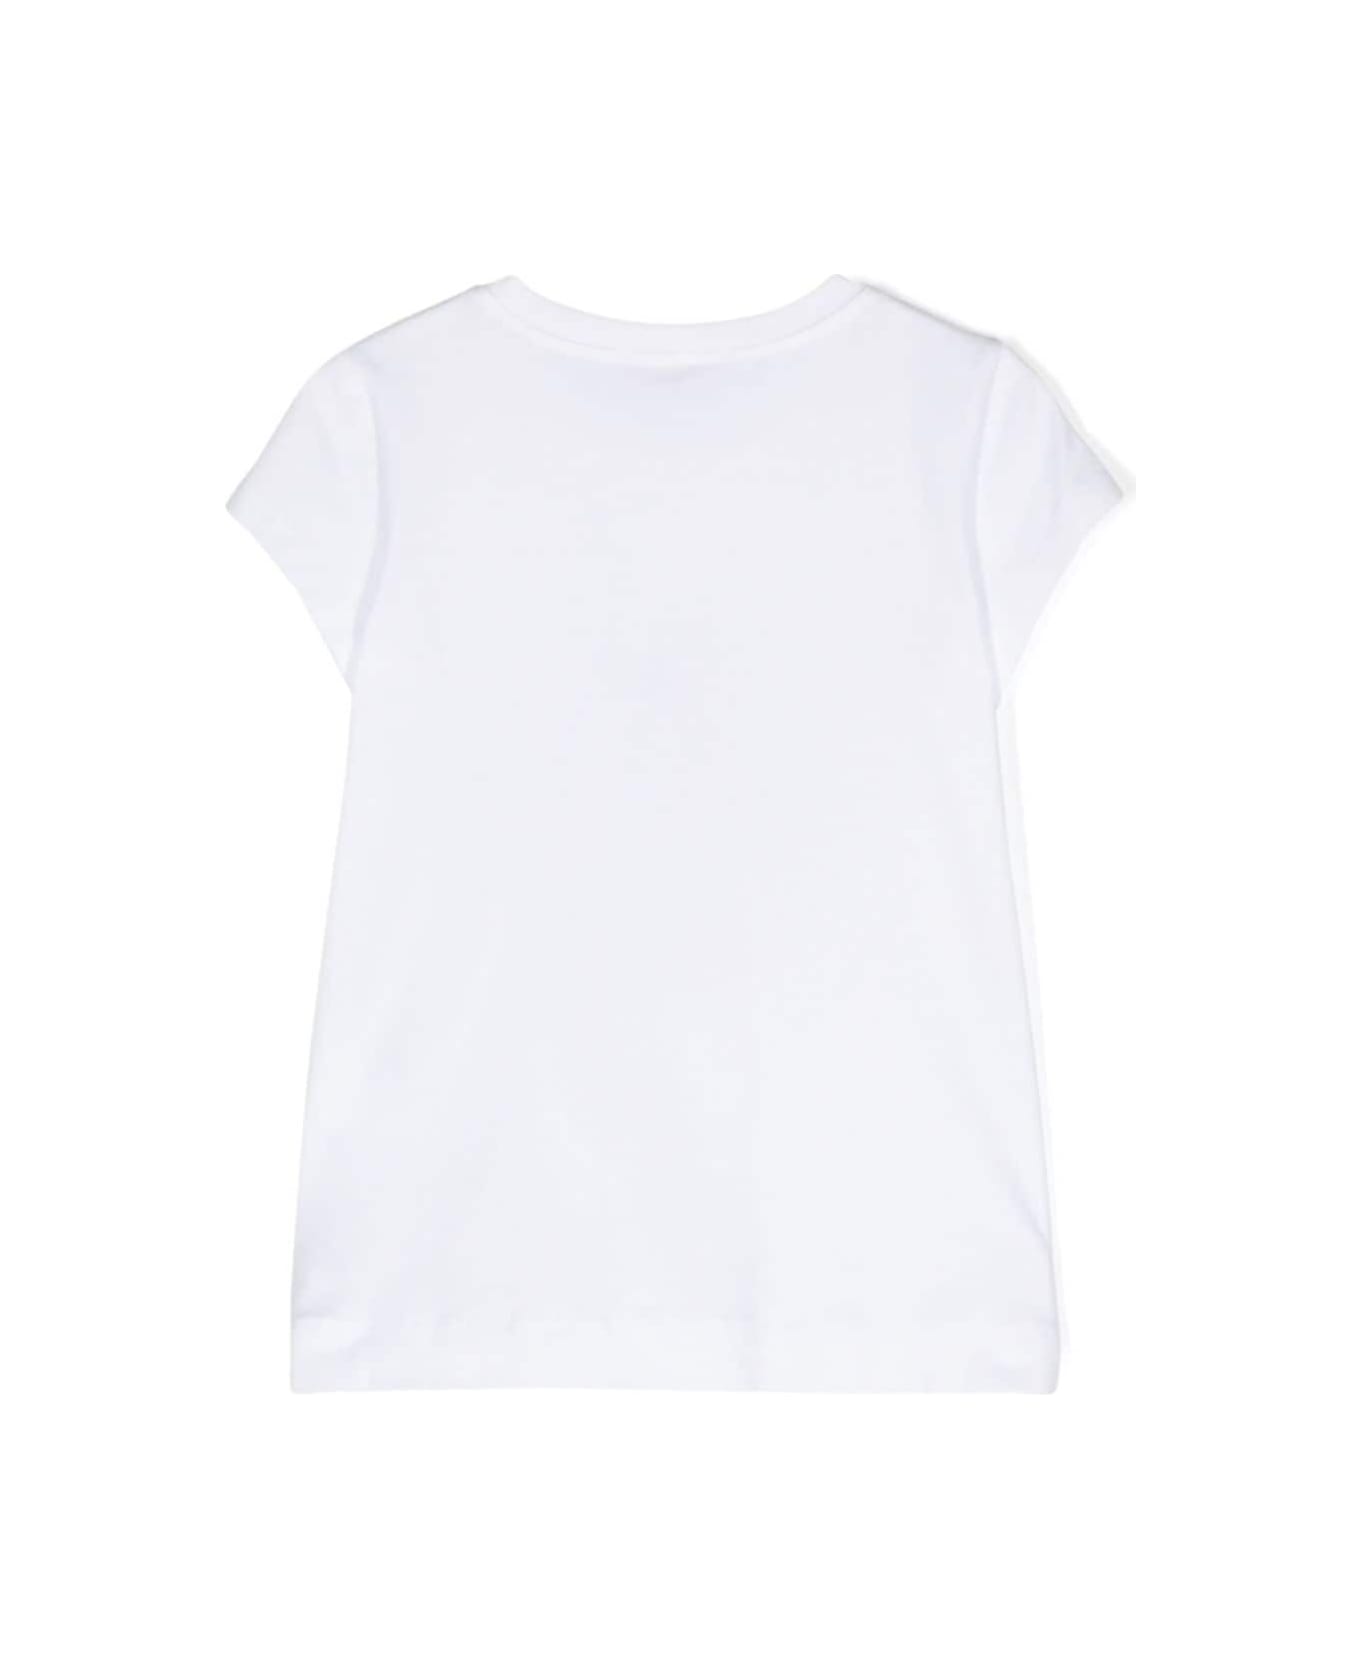 Monnalisa White T-shirt With Starfish Print In Stretch Cotton Girl - White